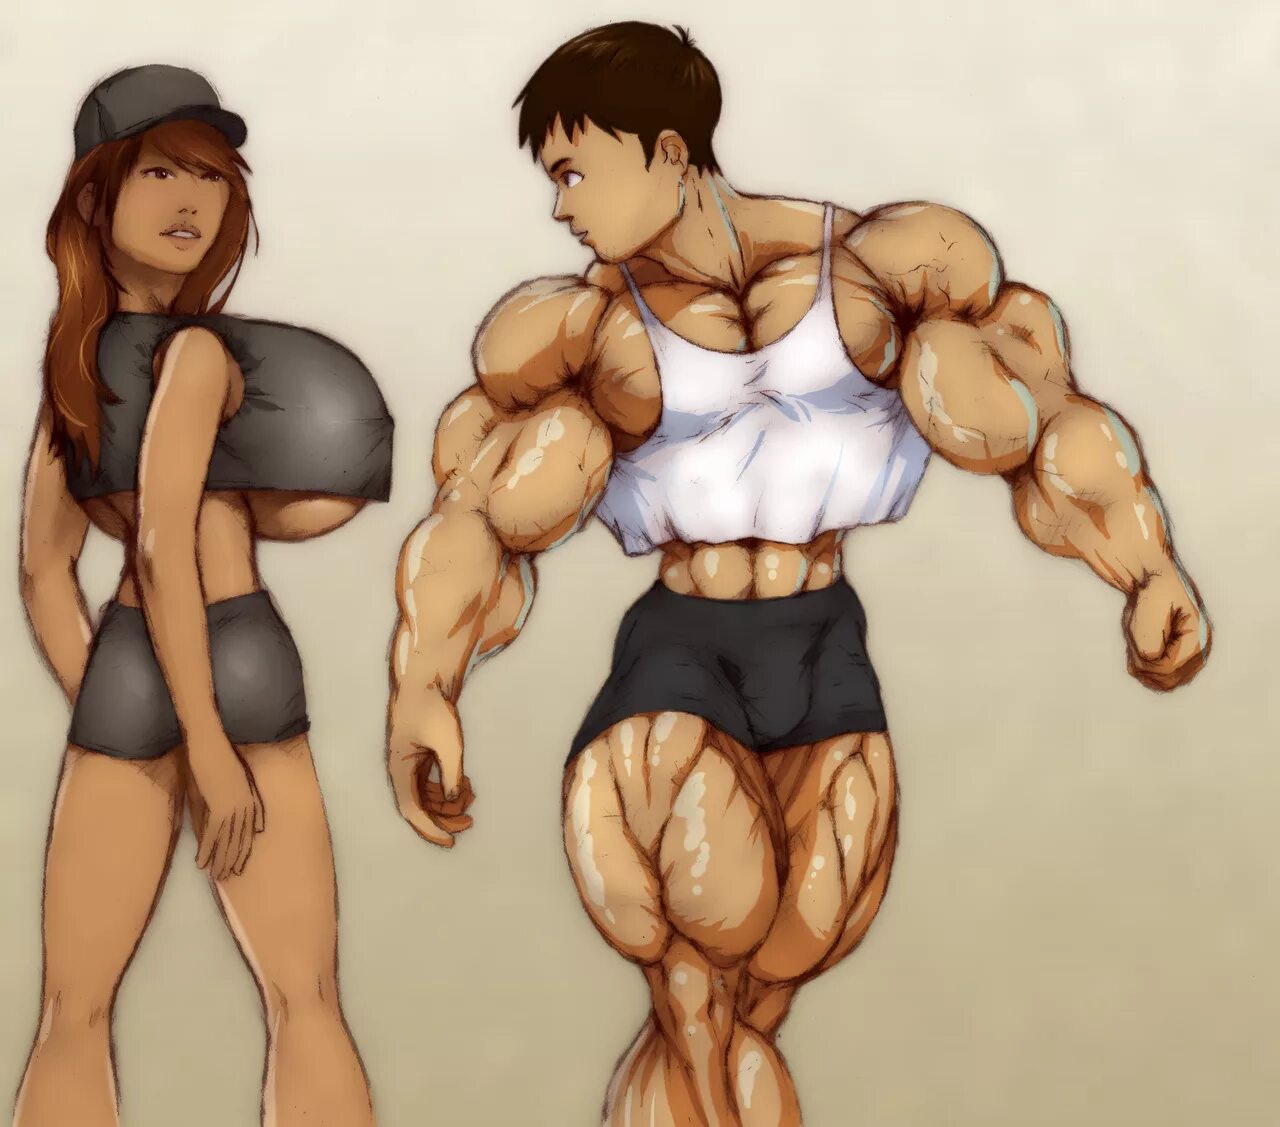 3 cock ass. FMG muscle growth Transformations мальчиков. Девочка с гигантскими мускулами.